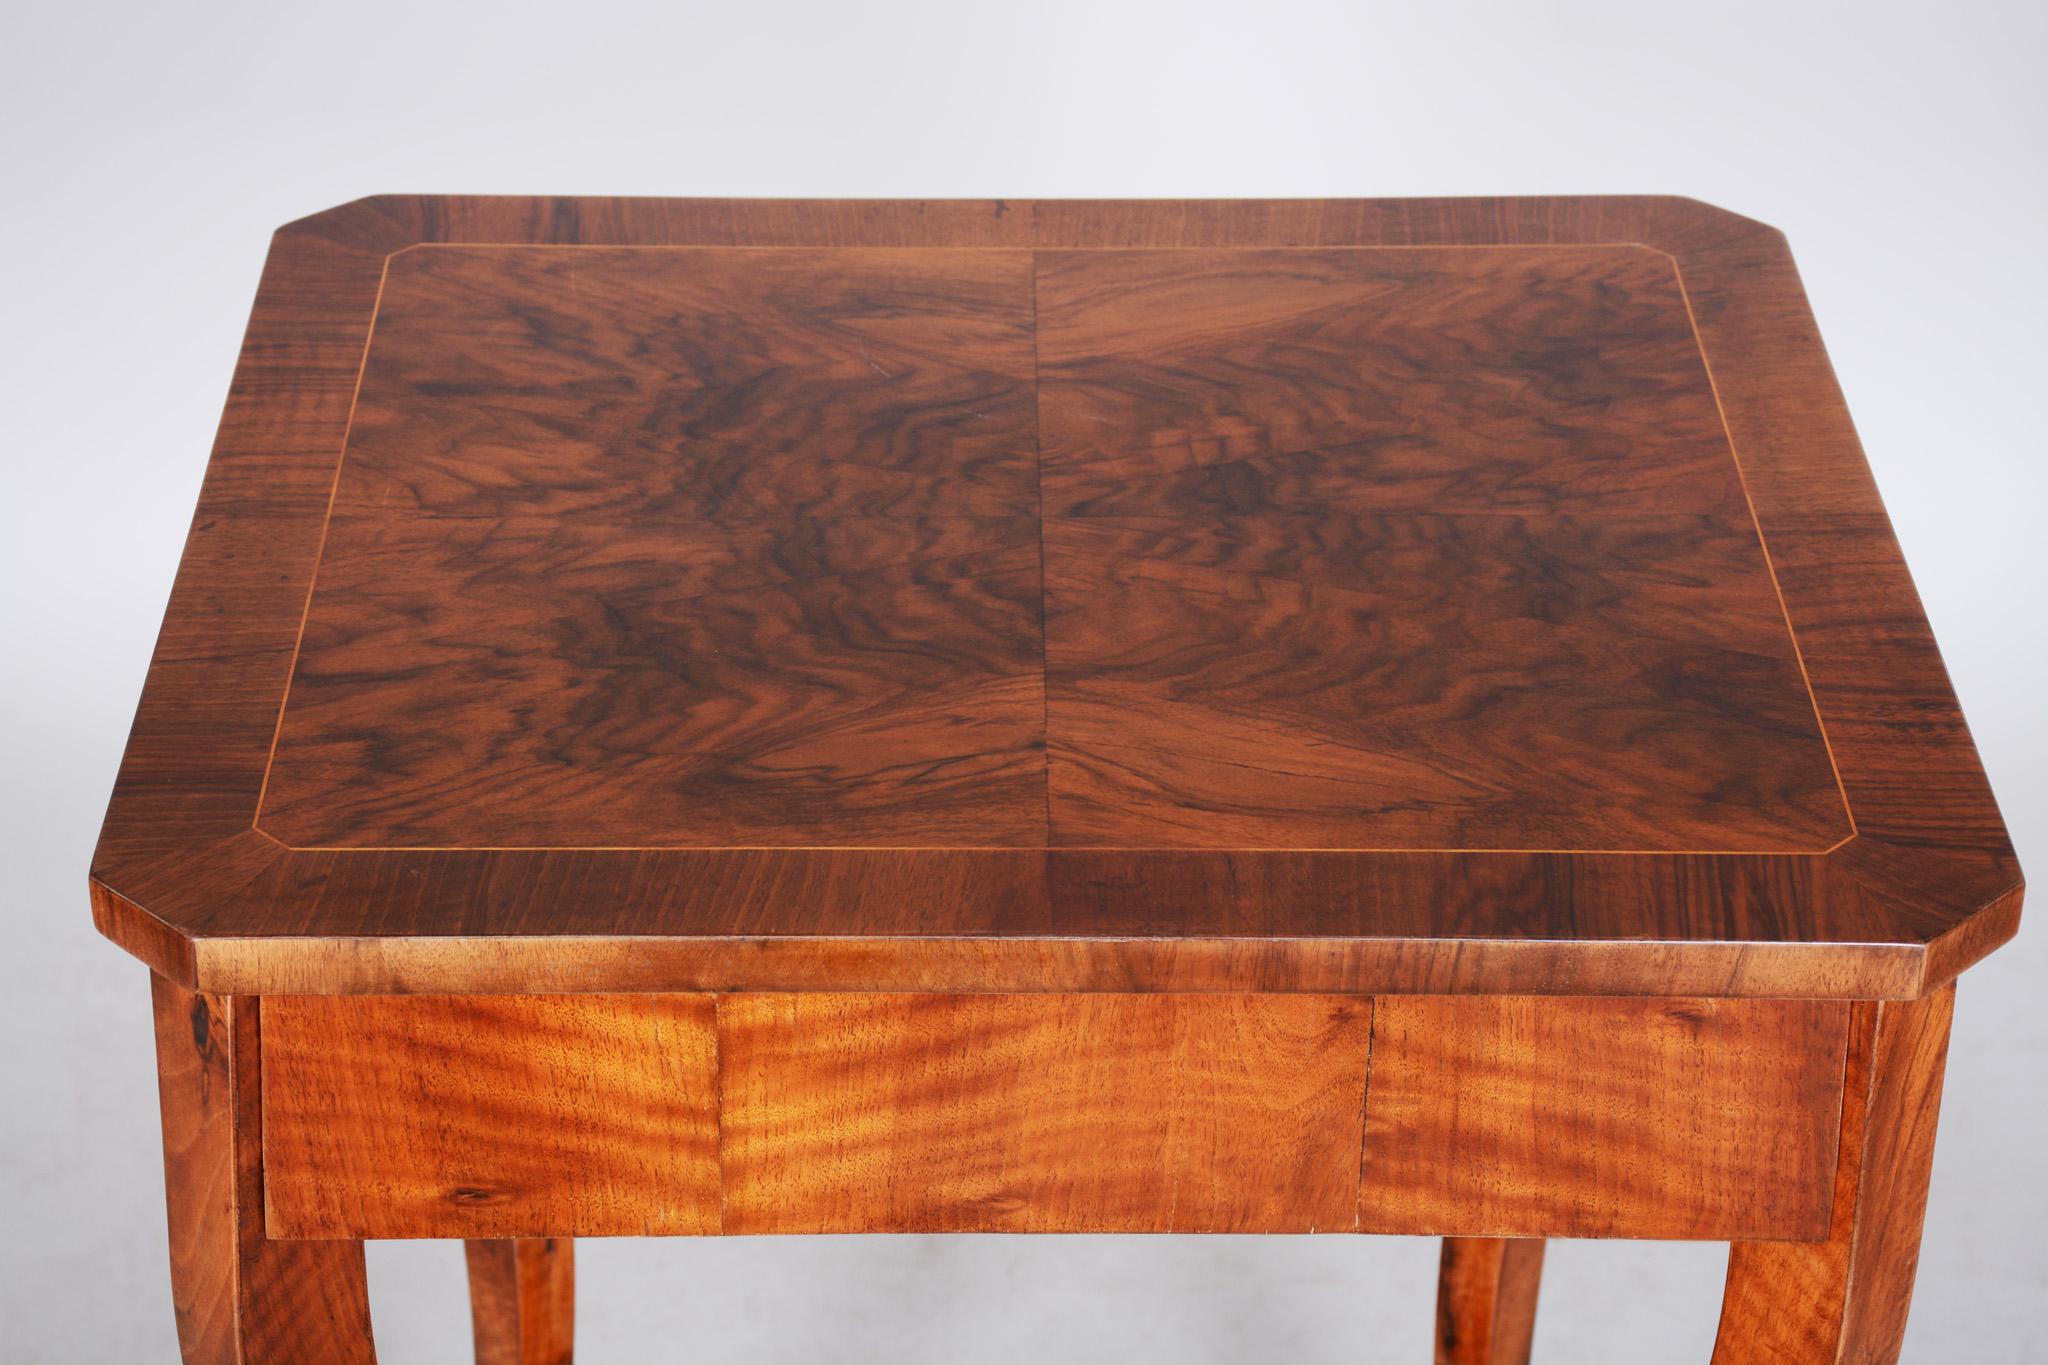 19th Century Small Brown Walnut Biedermeier Side Table, Austria, 1830s, Shellac Polished